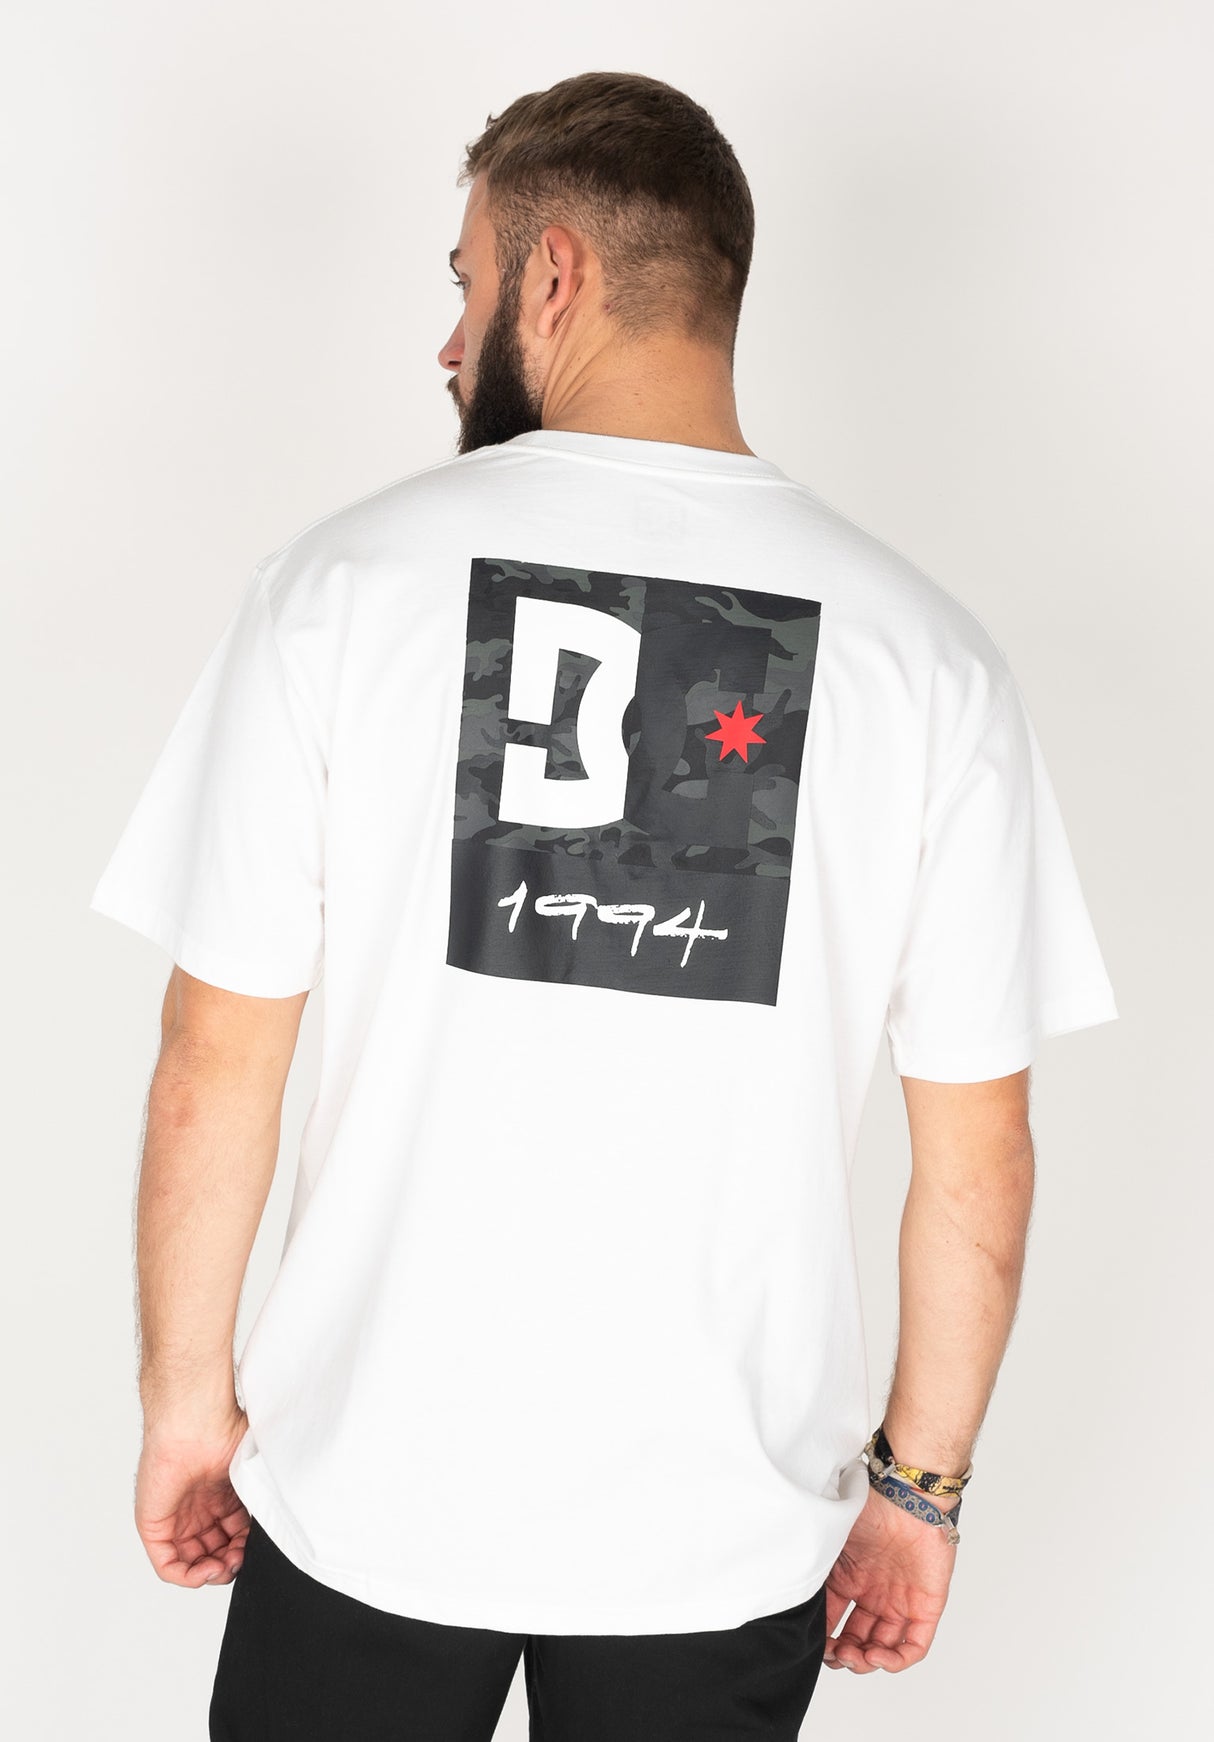 Split Star DC – in TITUS T-Shirt for Shoes white-black-camo Men